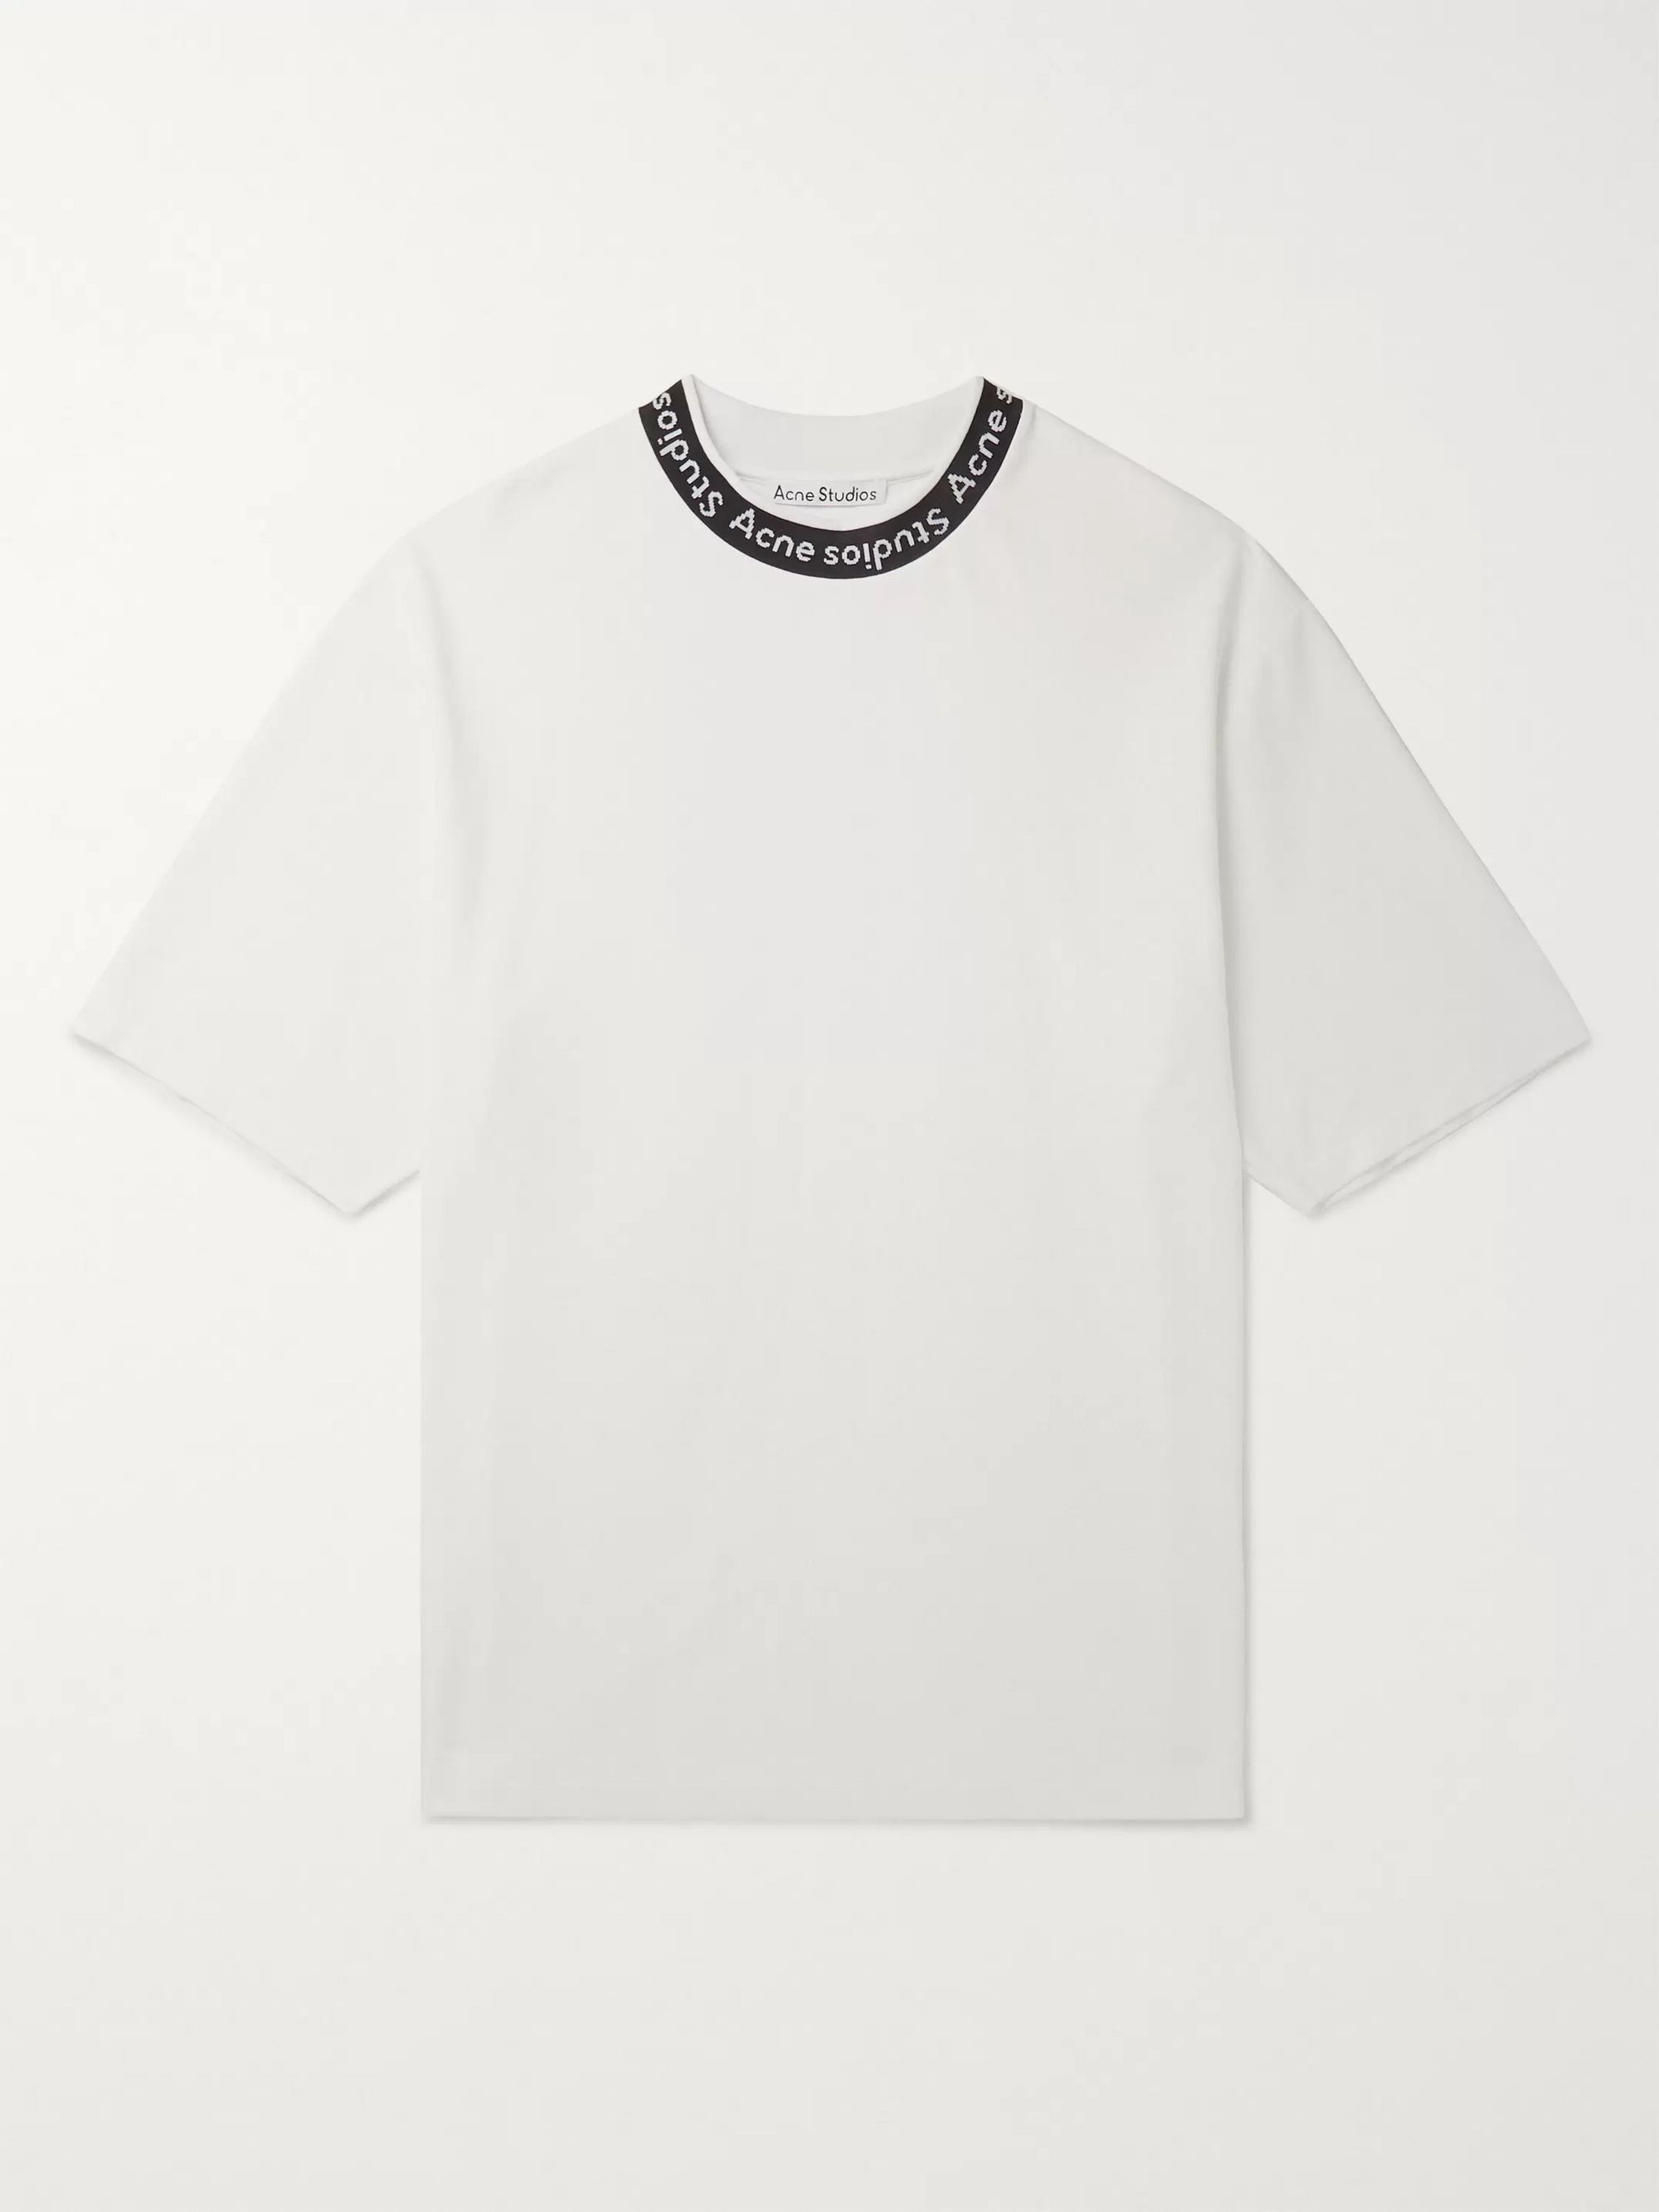 Acne Studio Tshirt Best Sale, 52% OFF | www.ingeniovirtual.com